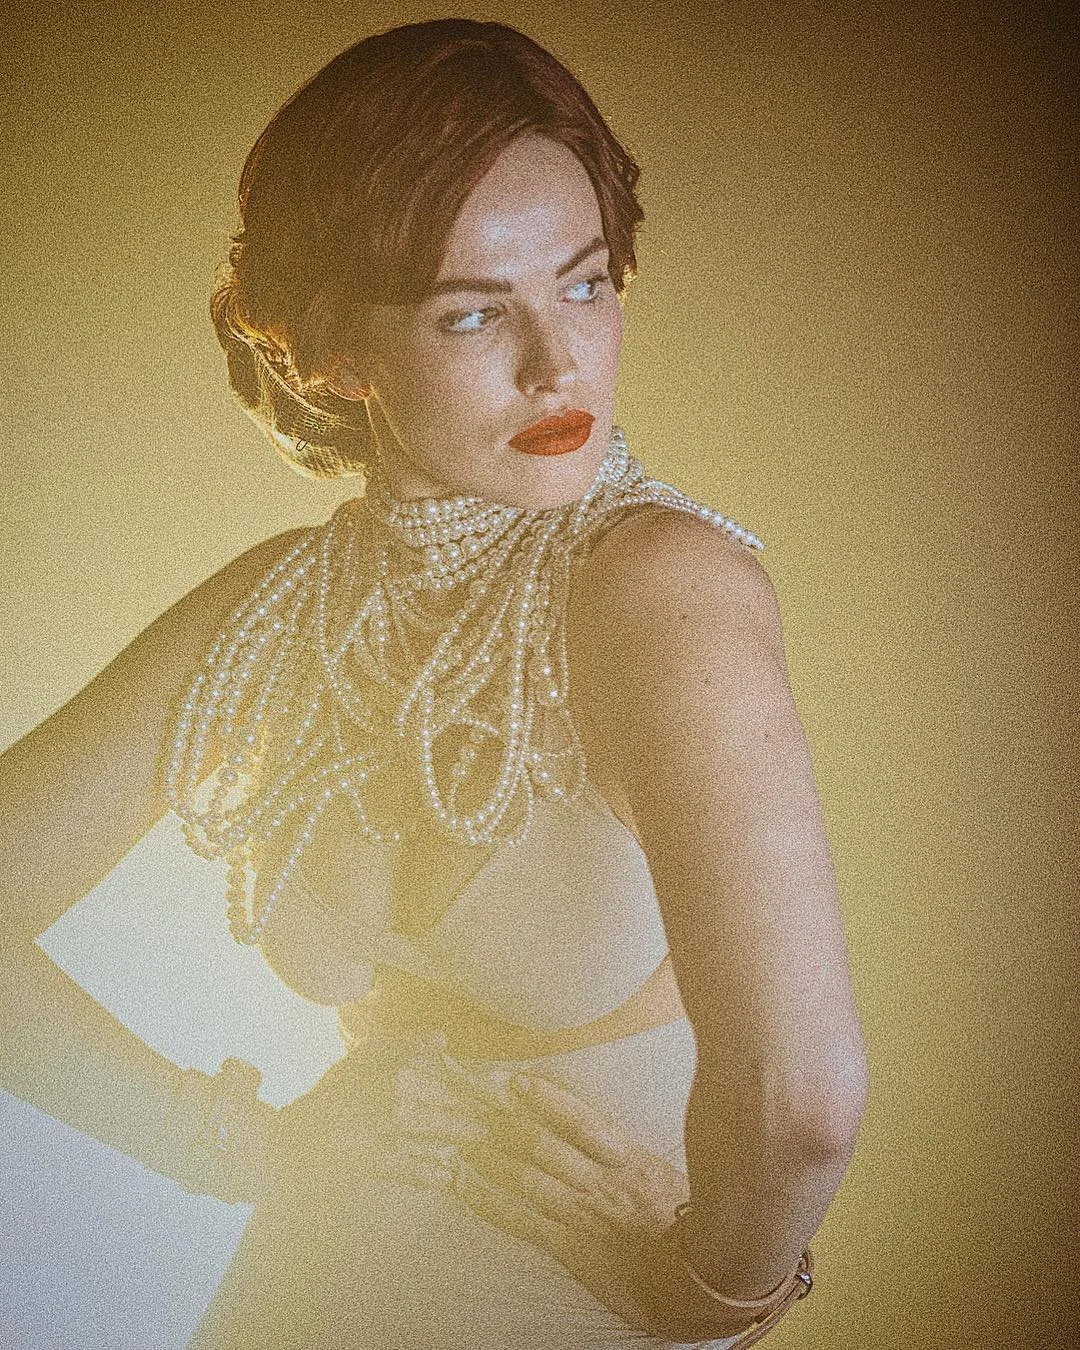 Даша Астаф’єва в образі акторки “золотого віку Голлівуду” загорнулася в перлове намисто - фото 423866